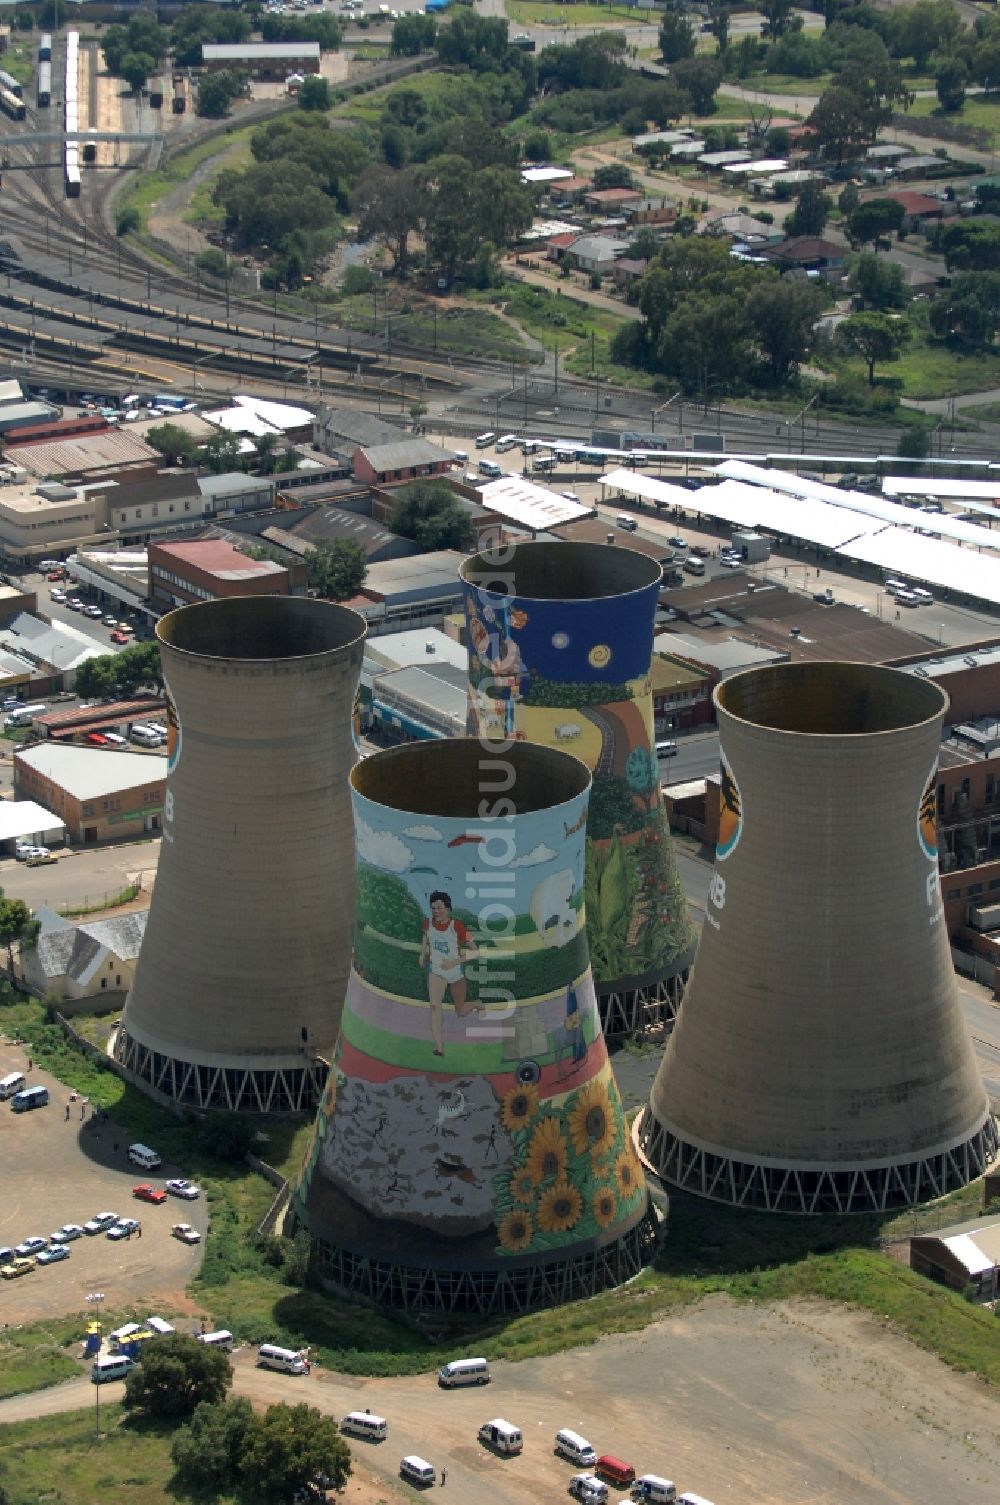 Luftbild Bloemfontein - Kühltürme des Kraftwerkes in Bloemfontein in Free State, Südafrika